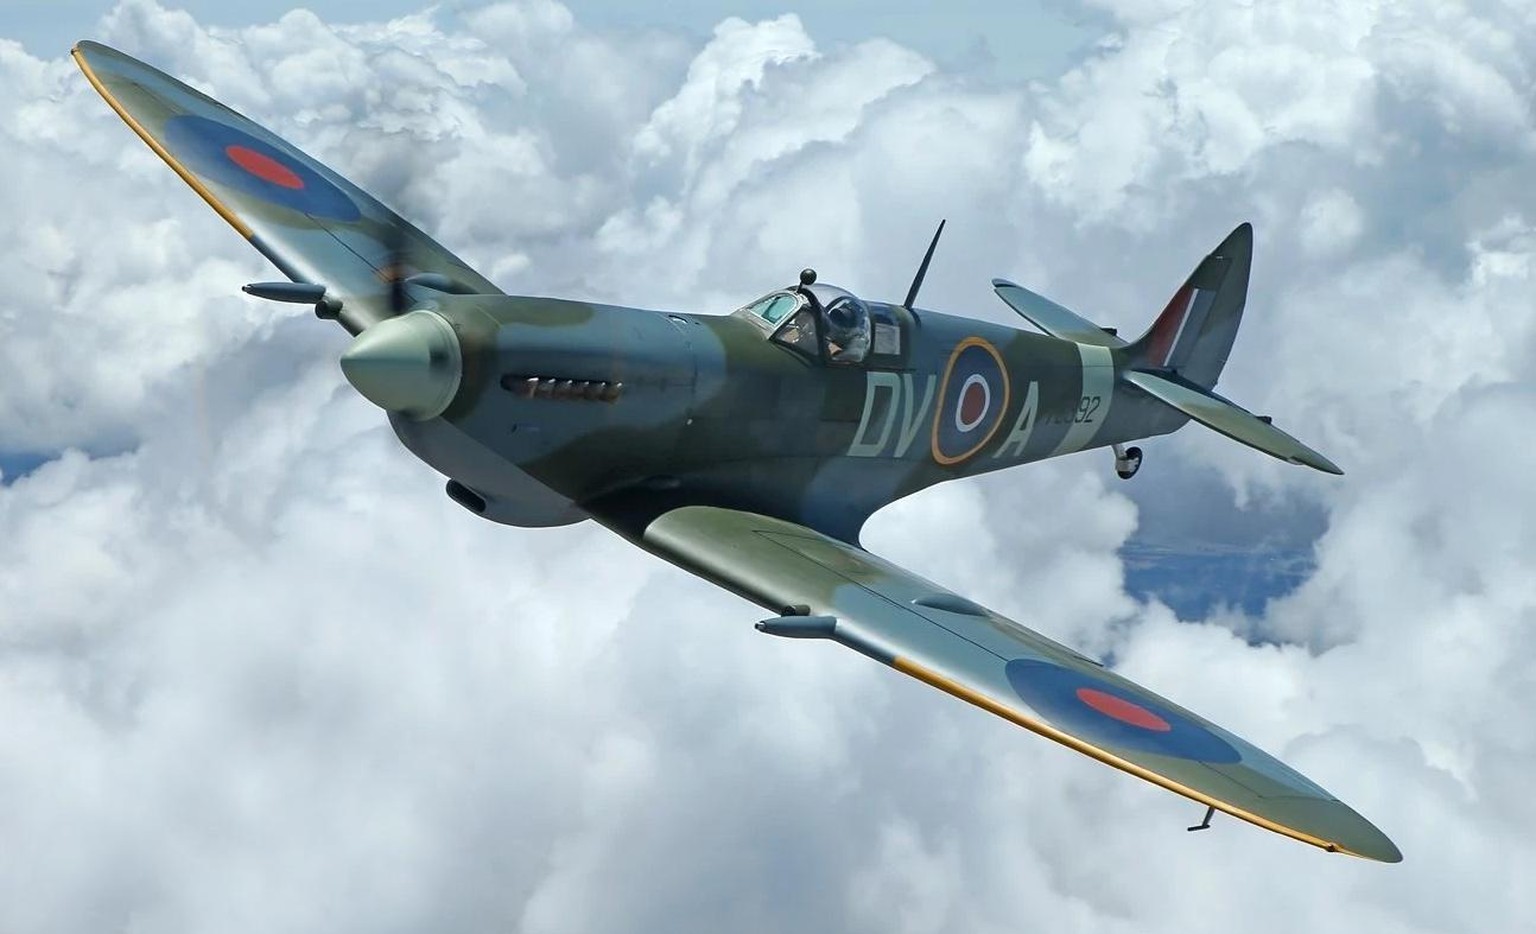 1945 Supermarine Spitfire XVIe
Spitfire XVIe TE392 
https://www.platinumfighters.com/inventory-2/1945-supermarine-spitfire-xvie-